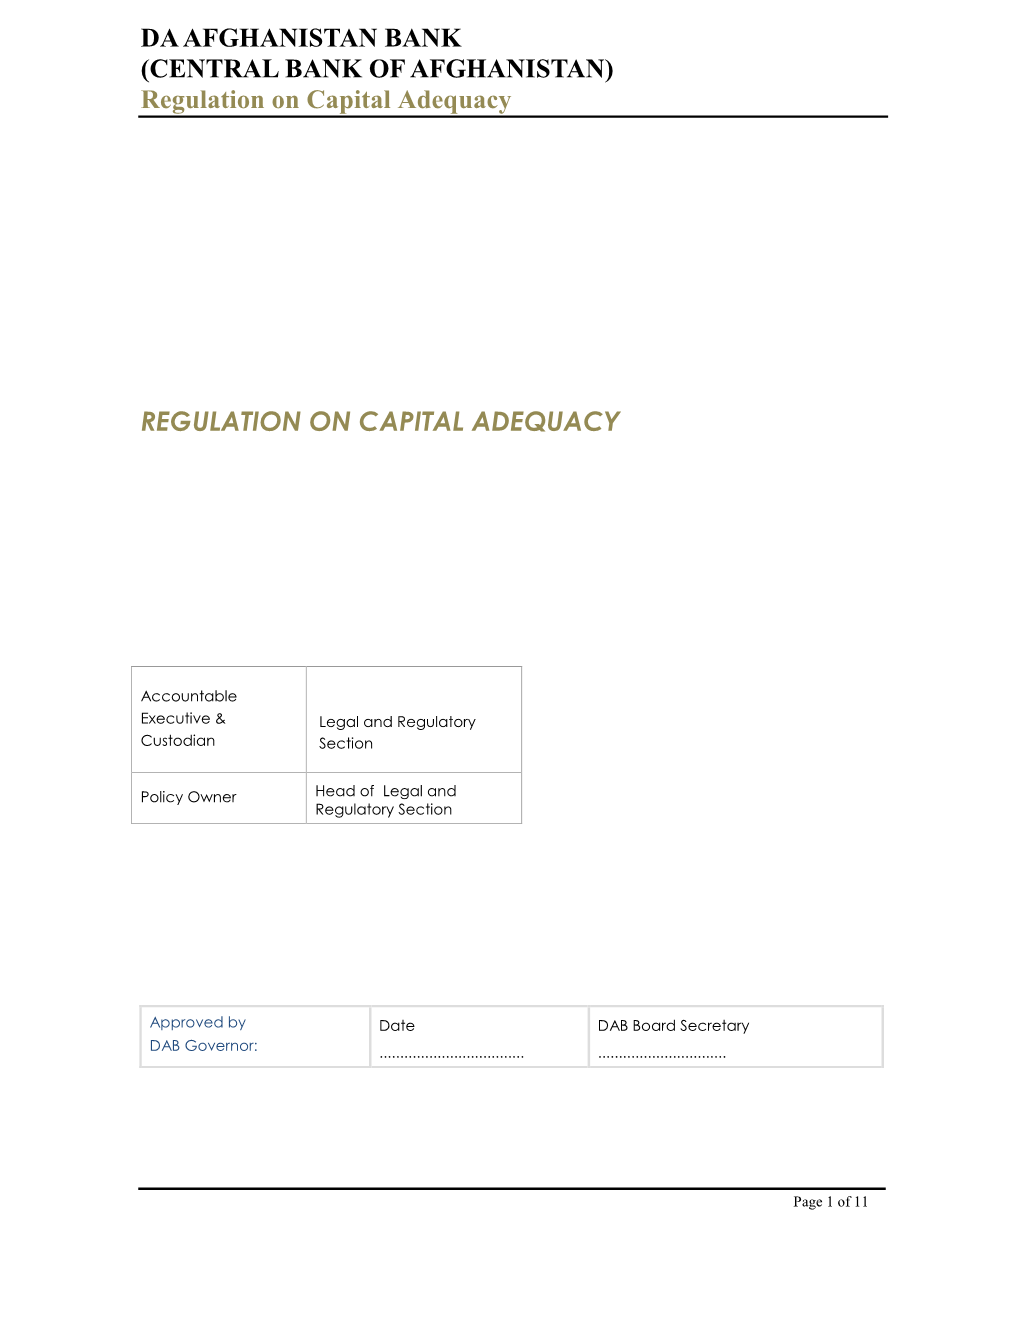 Regulation on Capital Adequacy